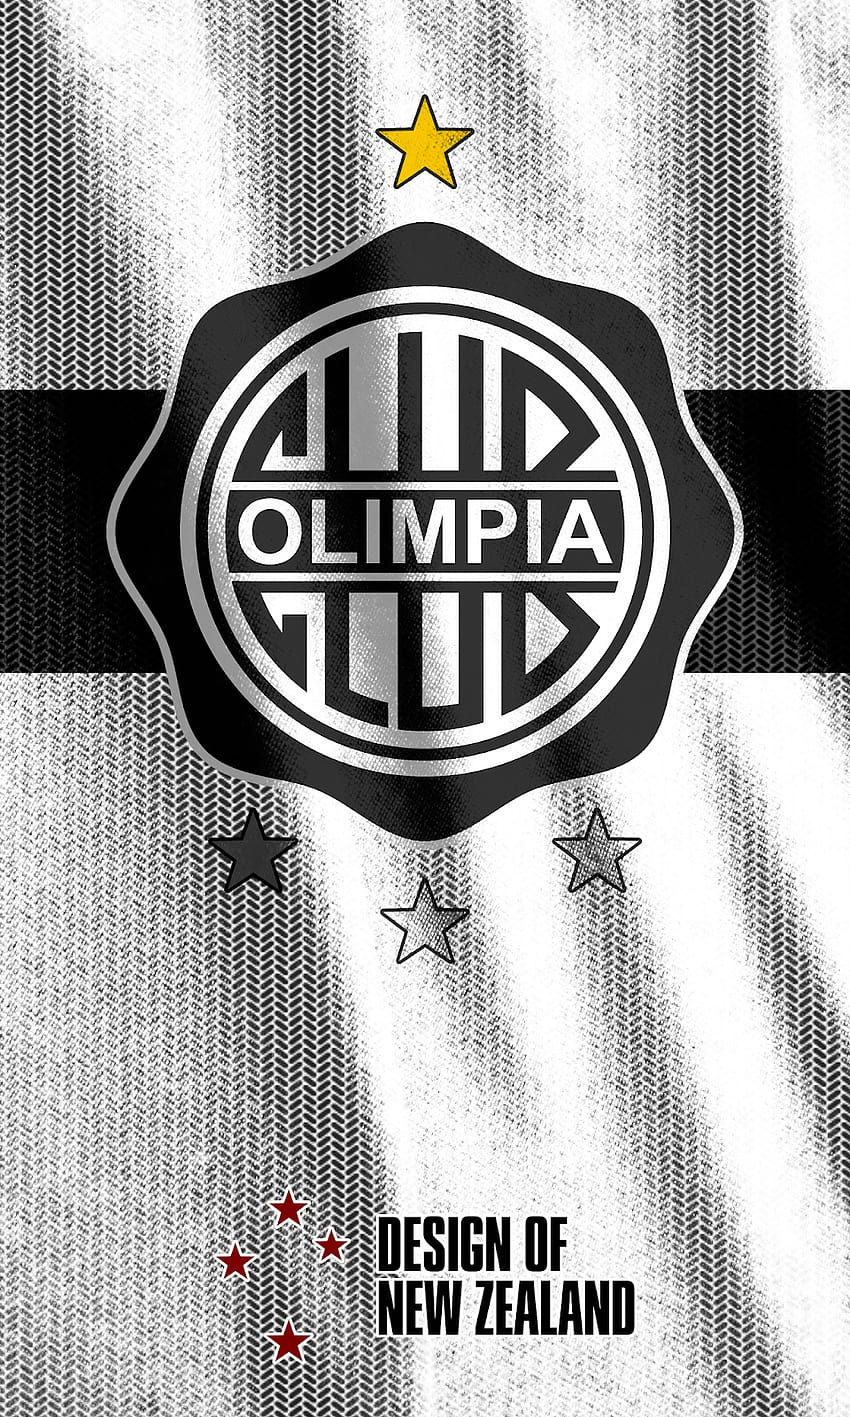 Club Olimpia, klub futbol millonarios wallpaper ponsel HD